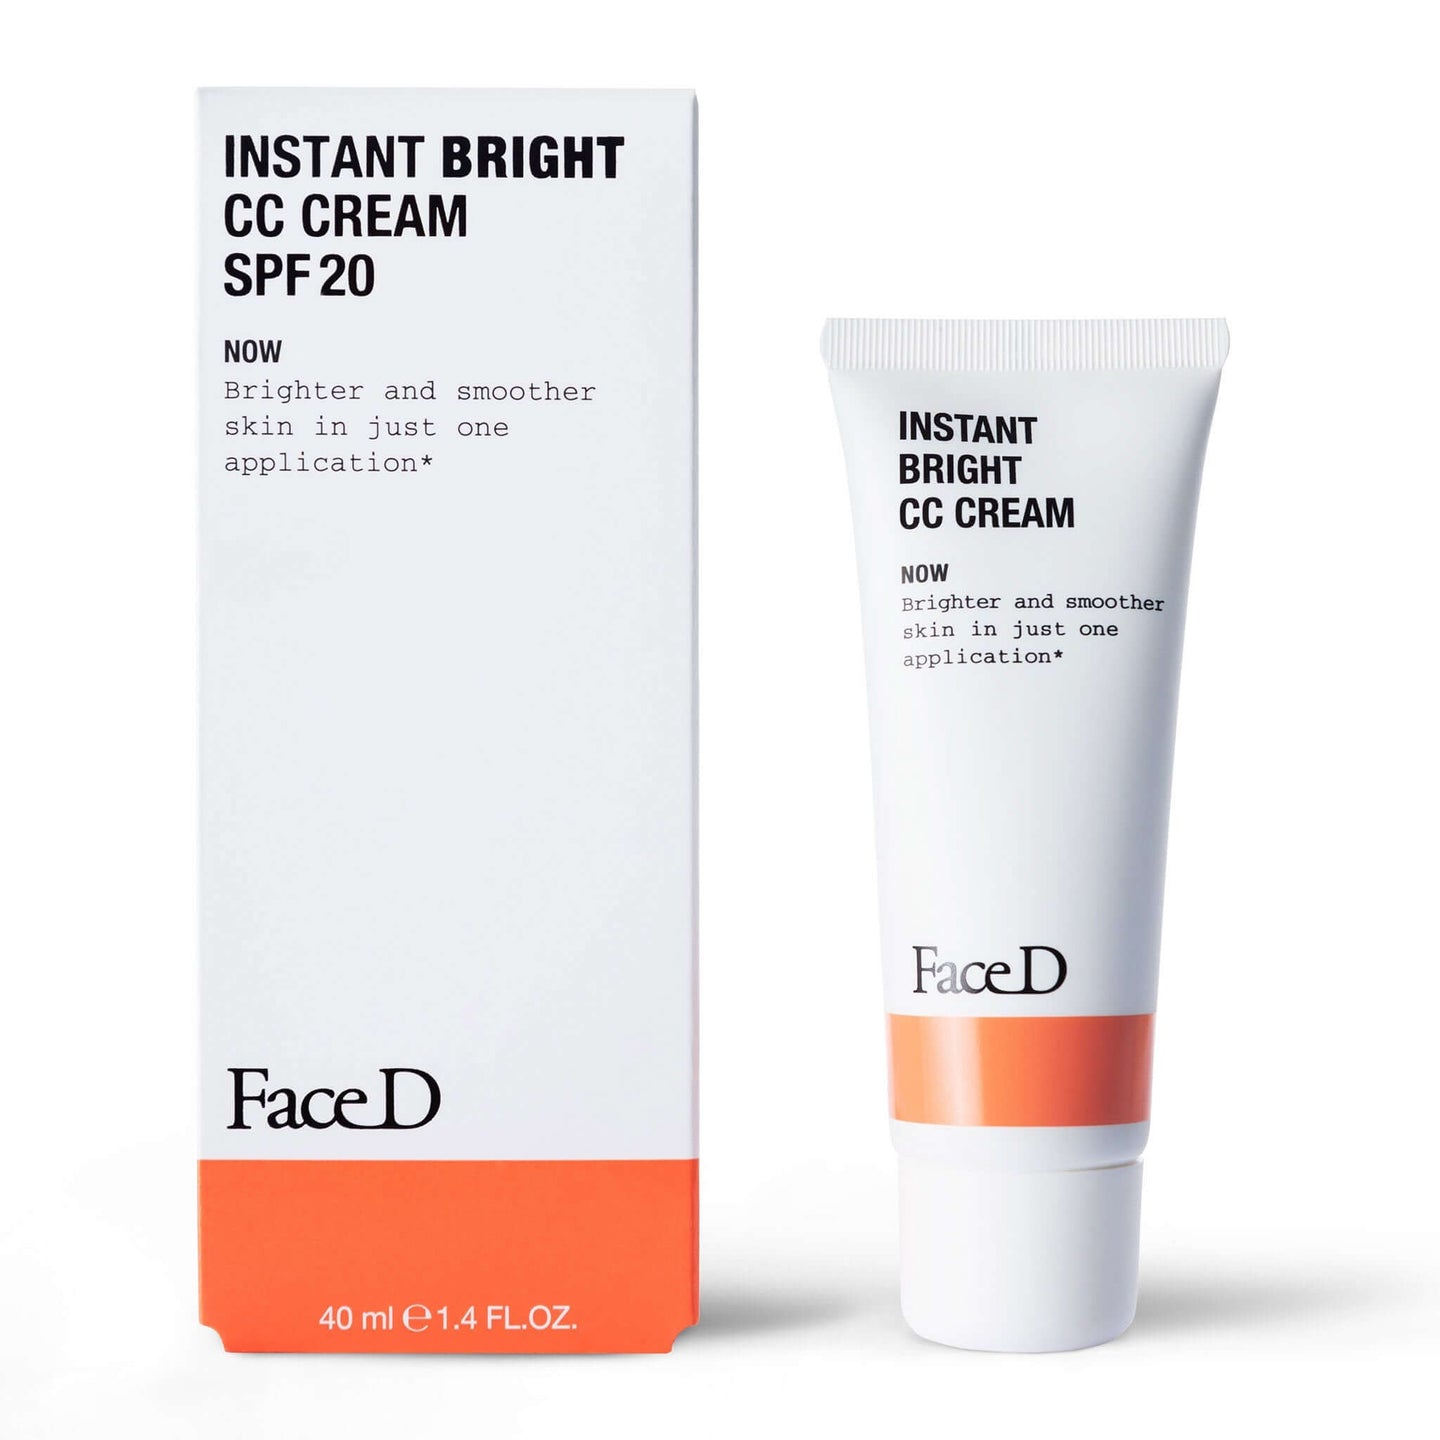 Instant-Bright-CC-Cream-SPF20-FaceD-CcCream_1